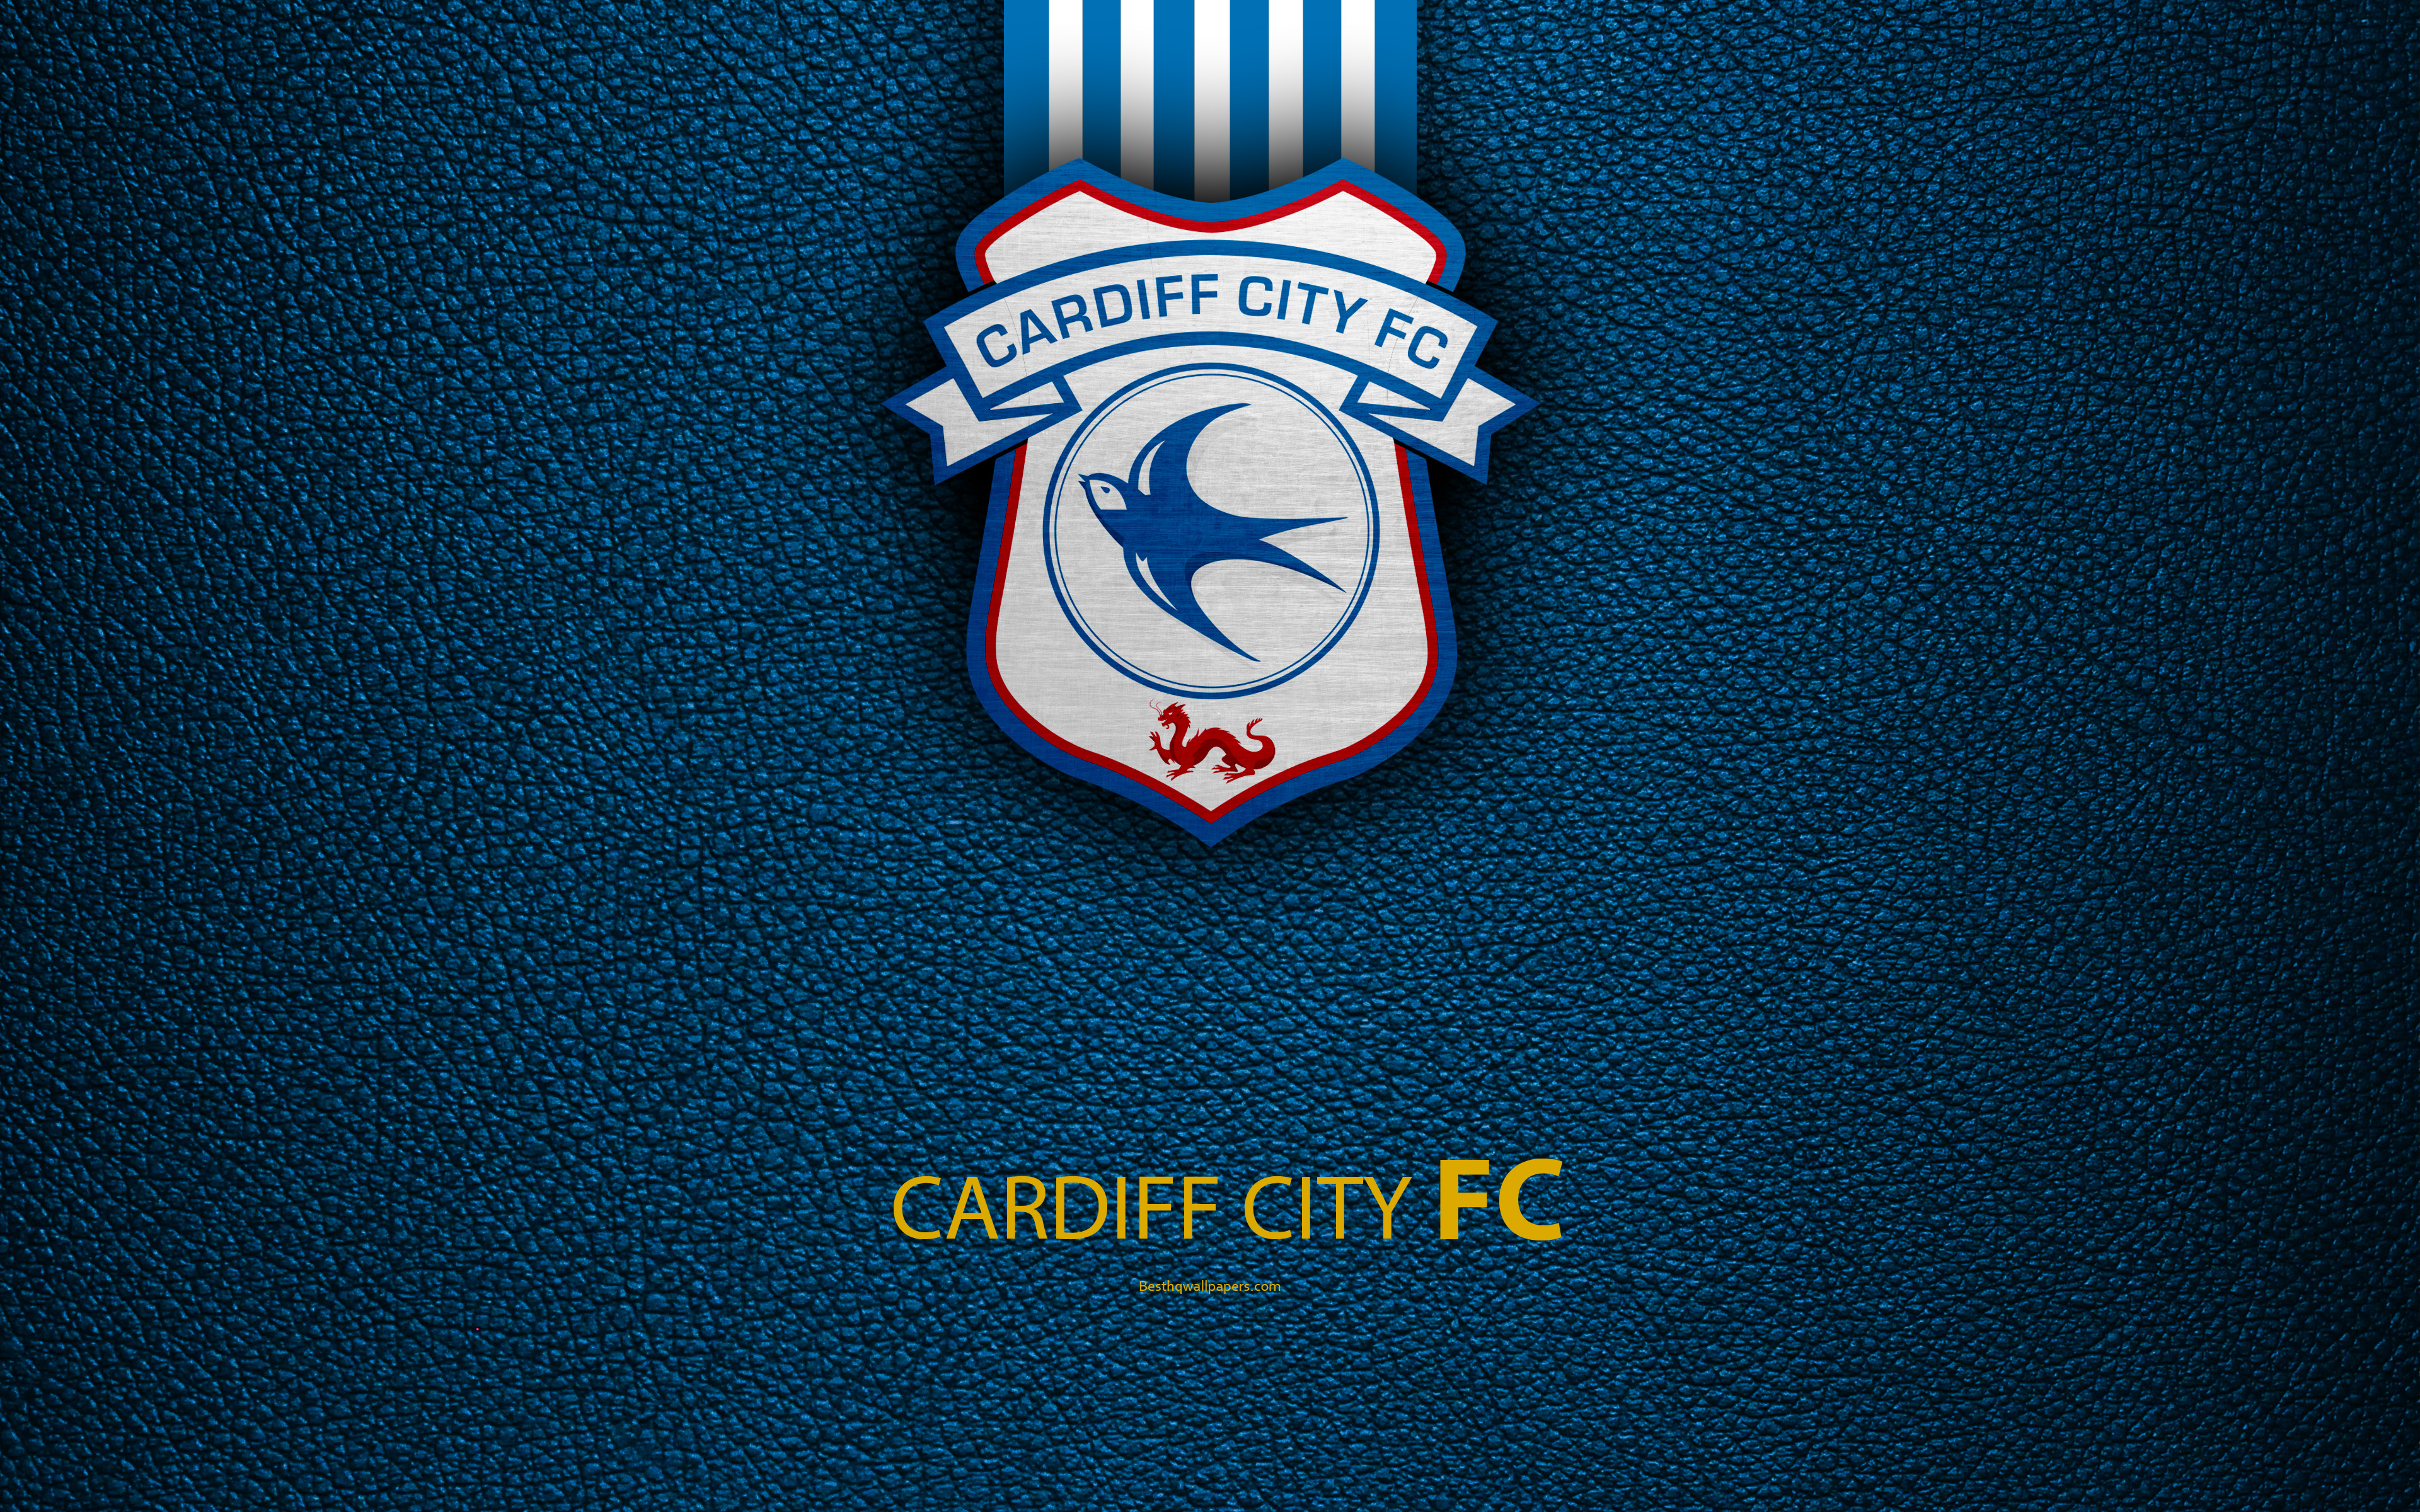 Wallpaper Cardiff City Fc 4k English Football Club